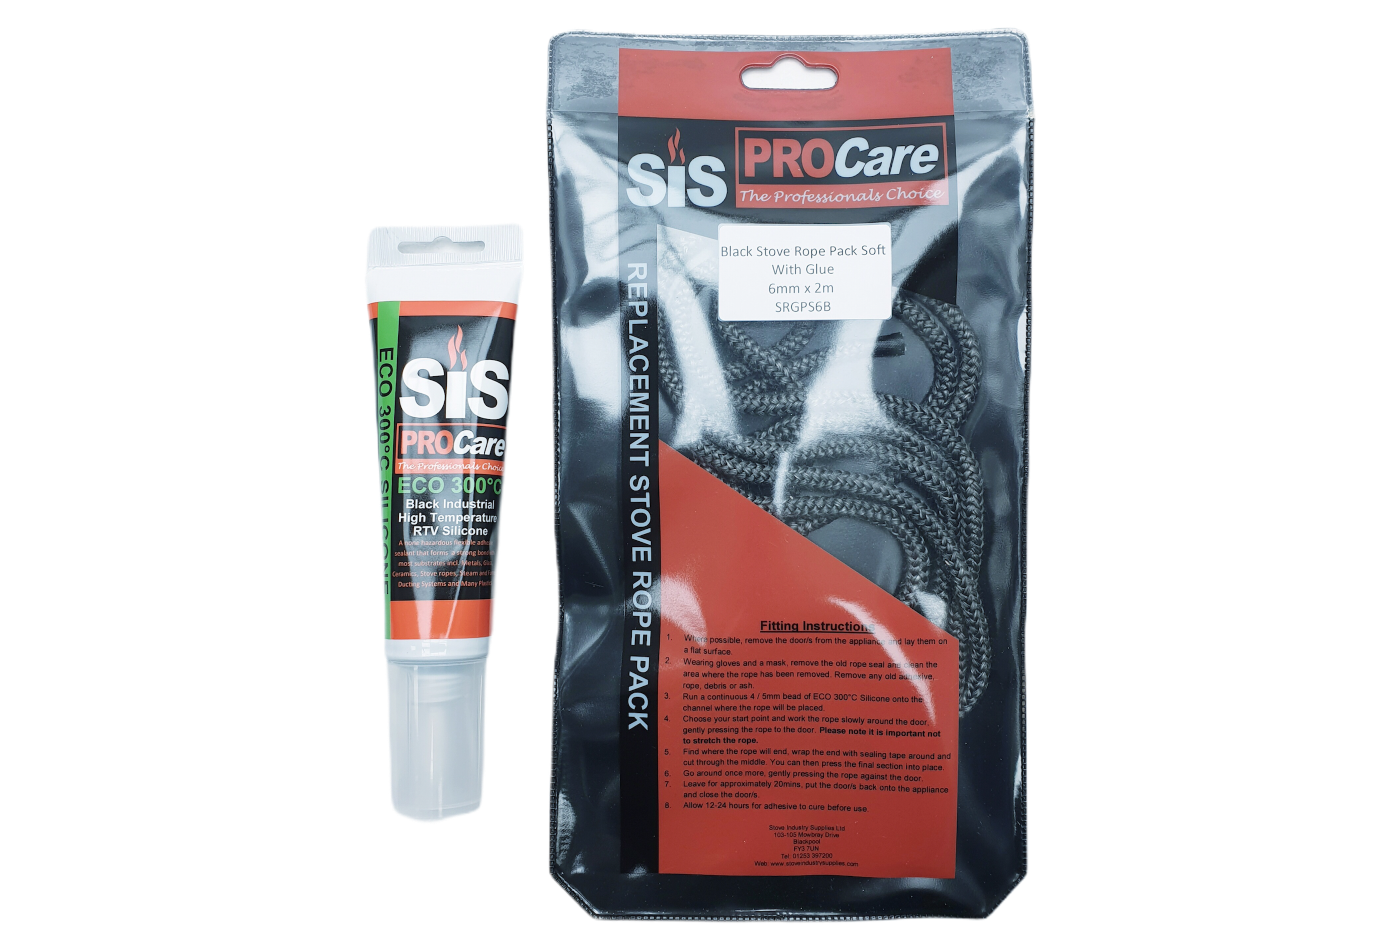 SiS Procare Black 6 milimetre x 2 metre Black Soft Stove Rope & 80 millilitre Rope Glue Pack - product code SRGPS6B